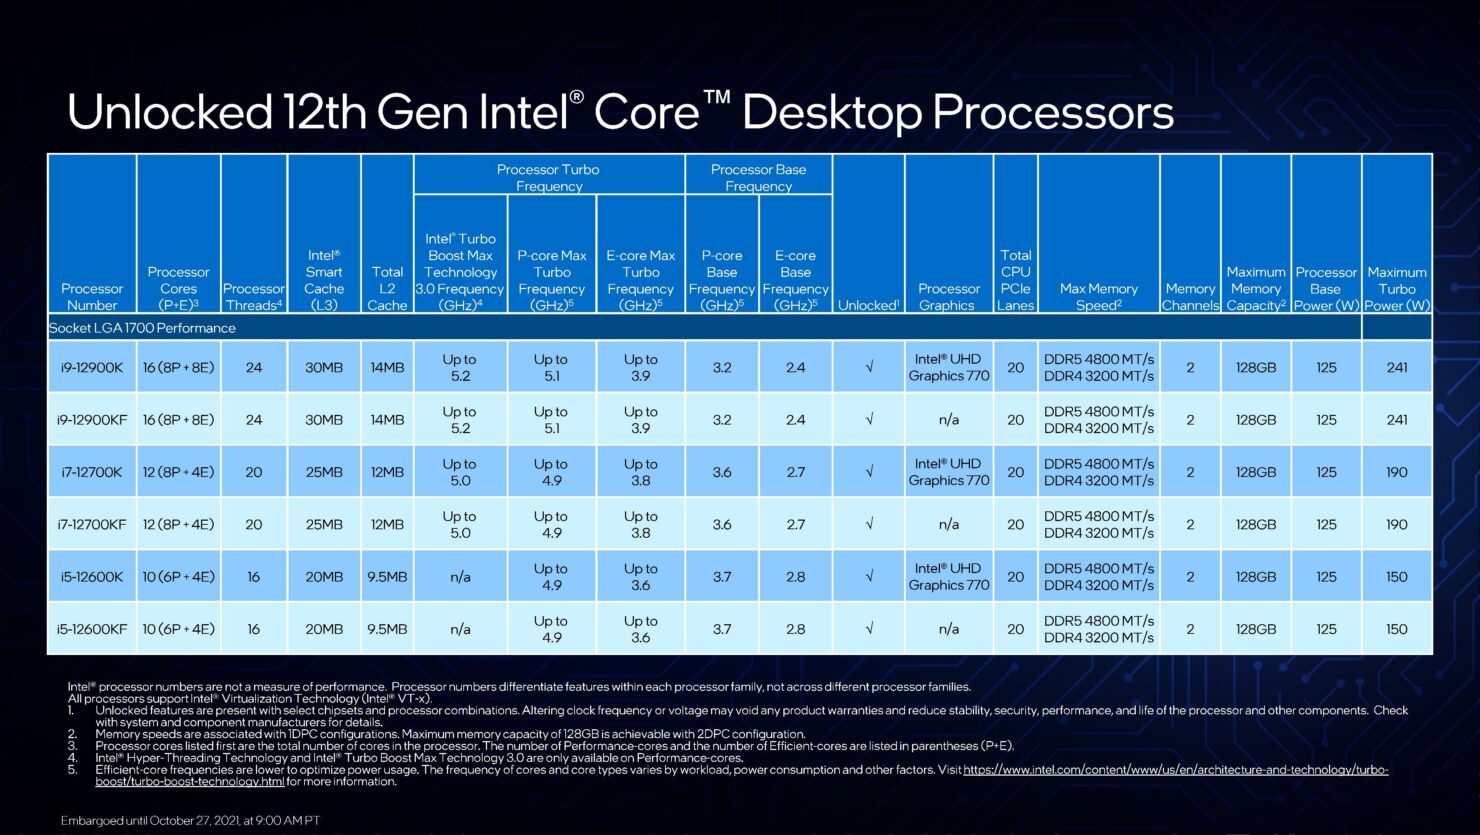 12th-gen-intel-core-desktop-processors-blueprint-presentation-embargoed-until-oct-27-2021-at-9-00am-pt-page-054-1480x835-5705919